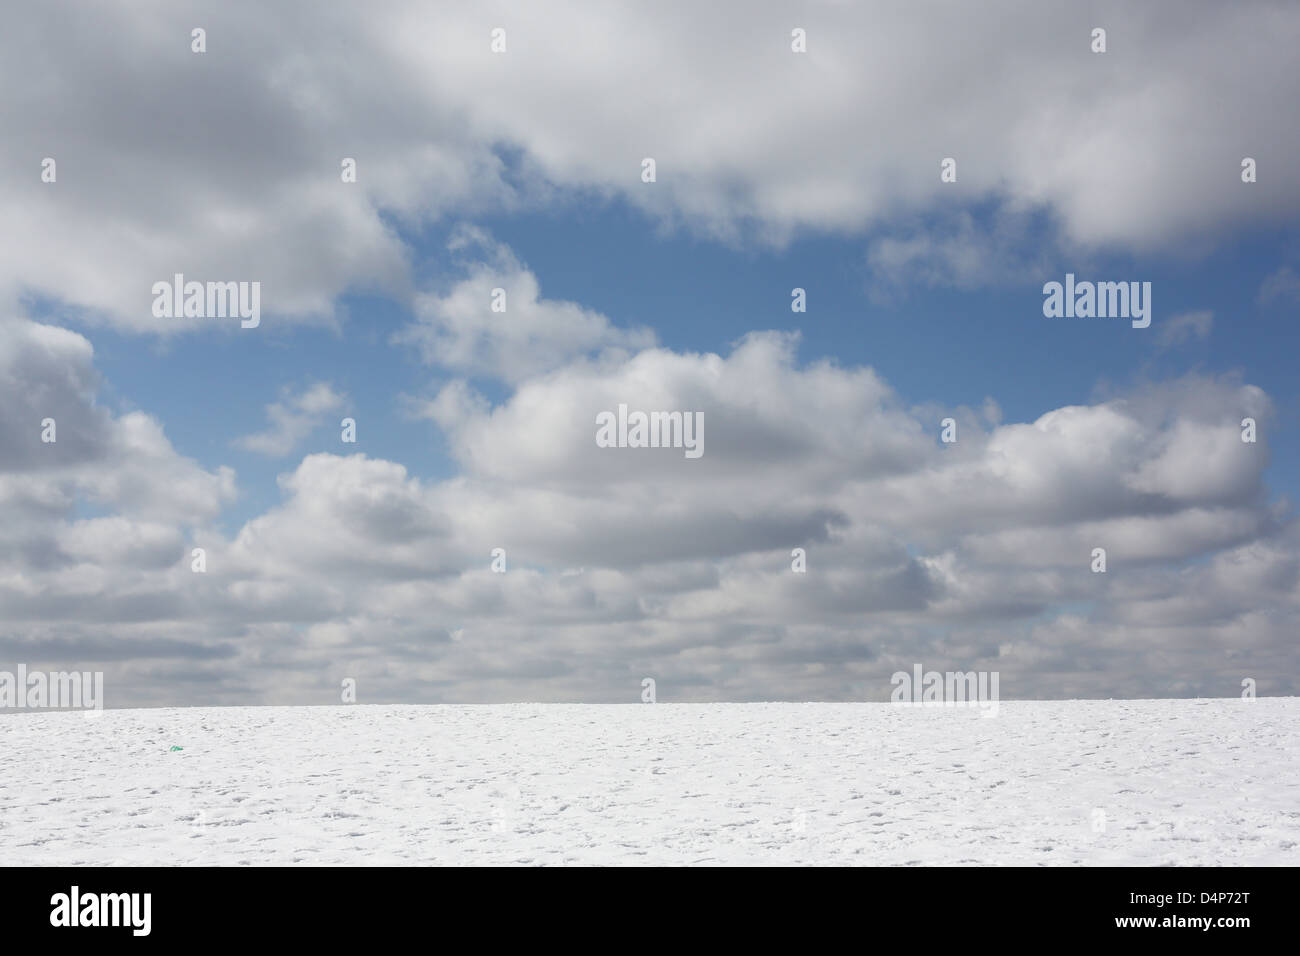 A snowy hillside under a cloudy sky. Stock Photo